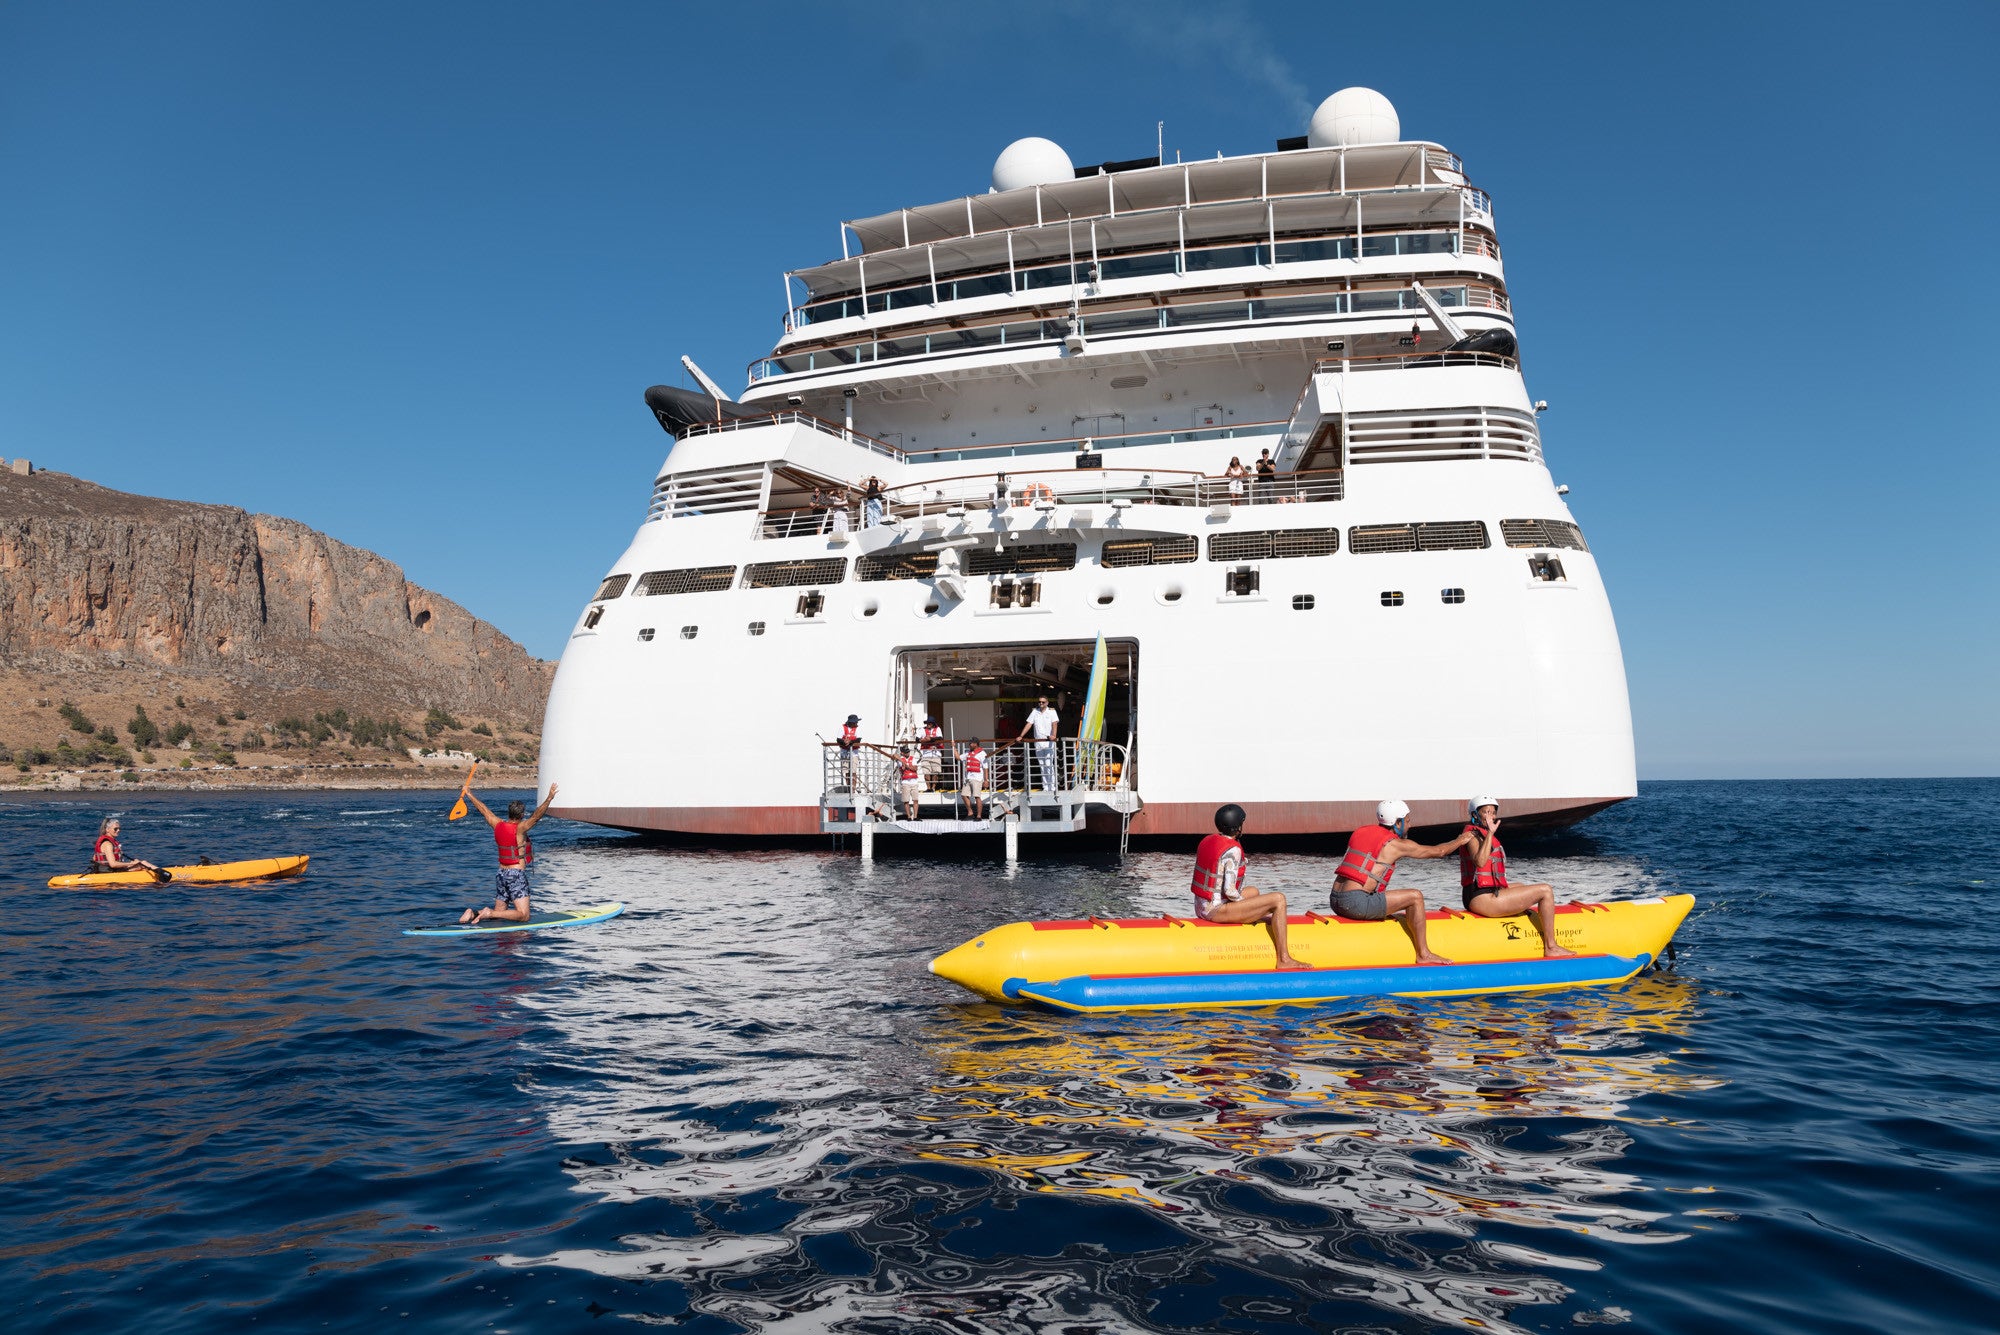 seabourn cruise ship capacity